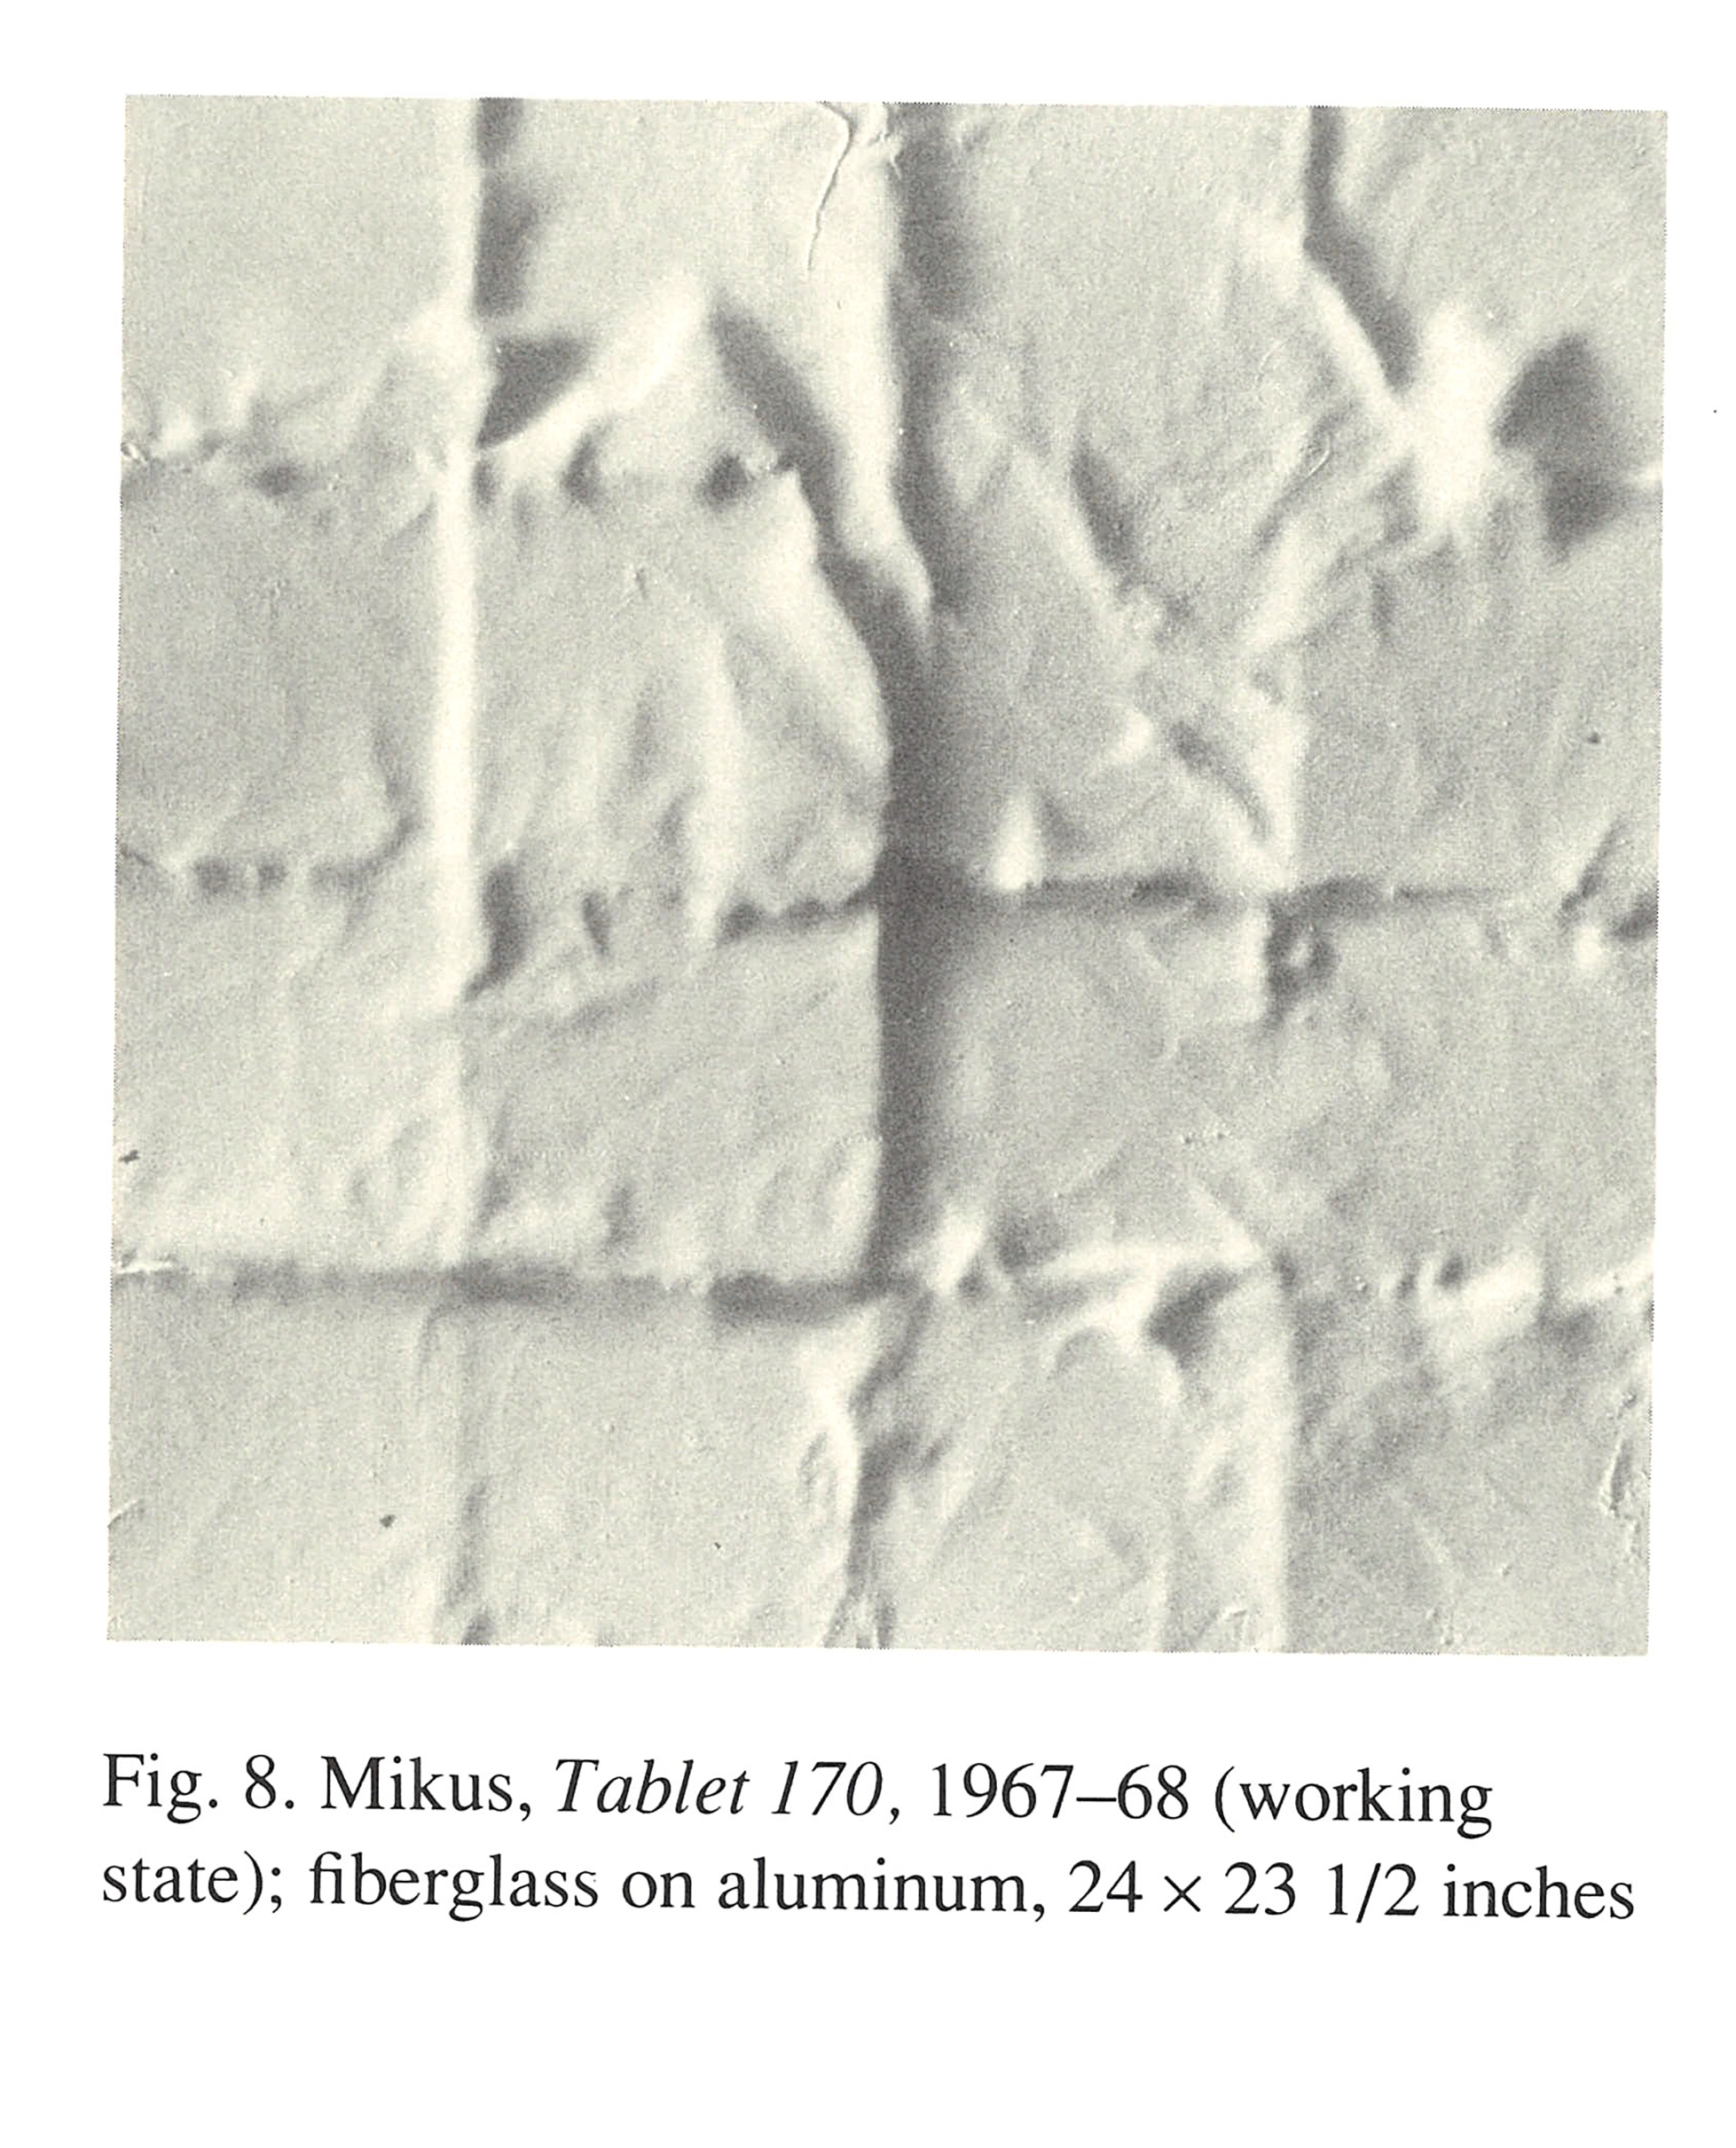 Archival image of Eleanor Mikus's work Tablet 170